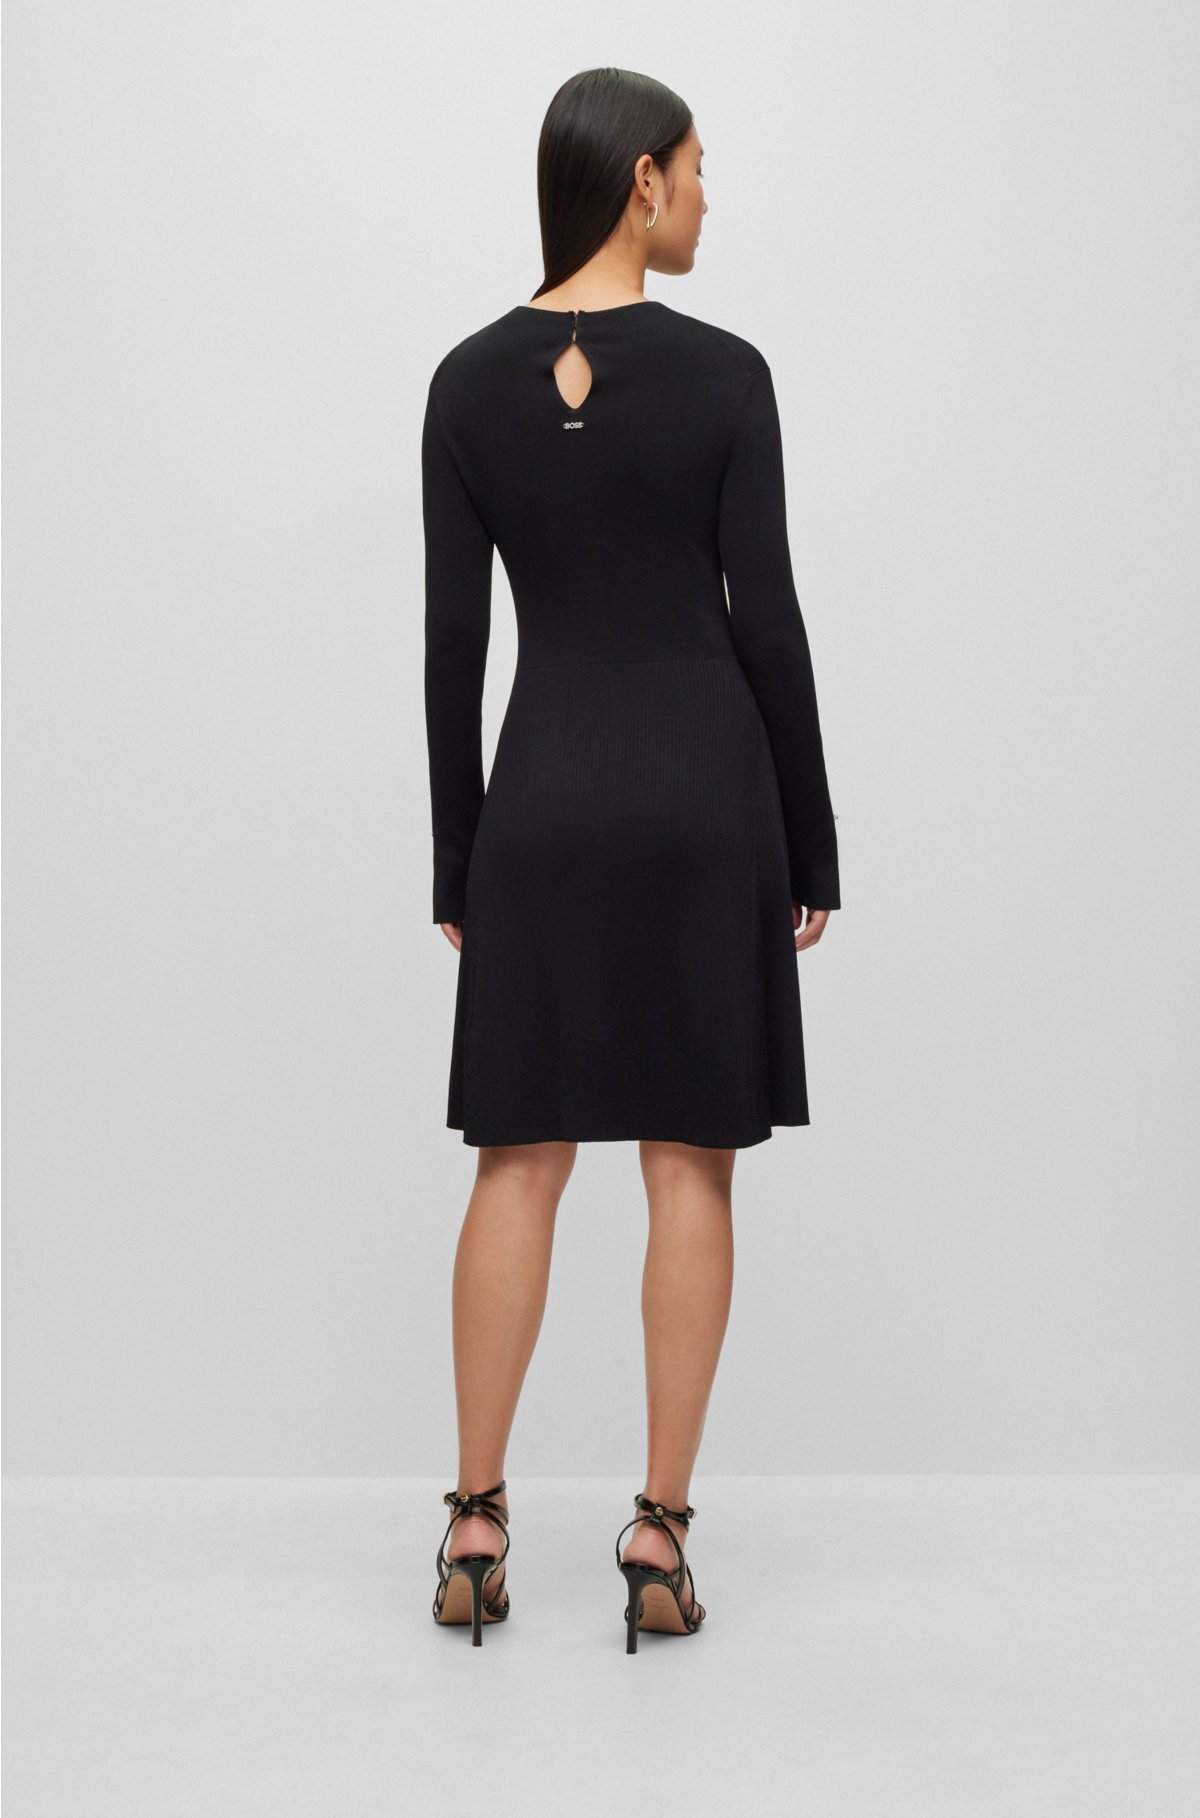 Donna Karan Dresses for Women, Online Sale up to 85% off